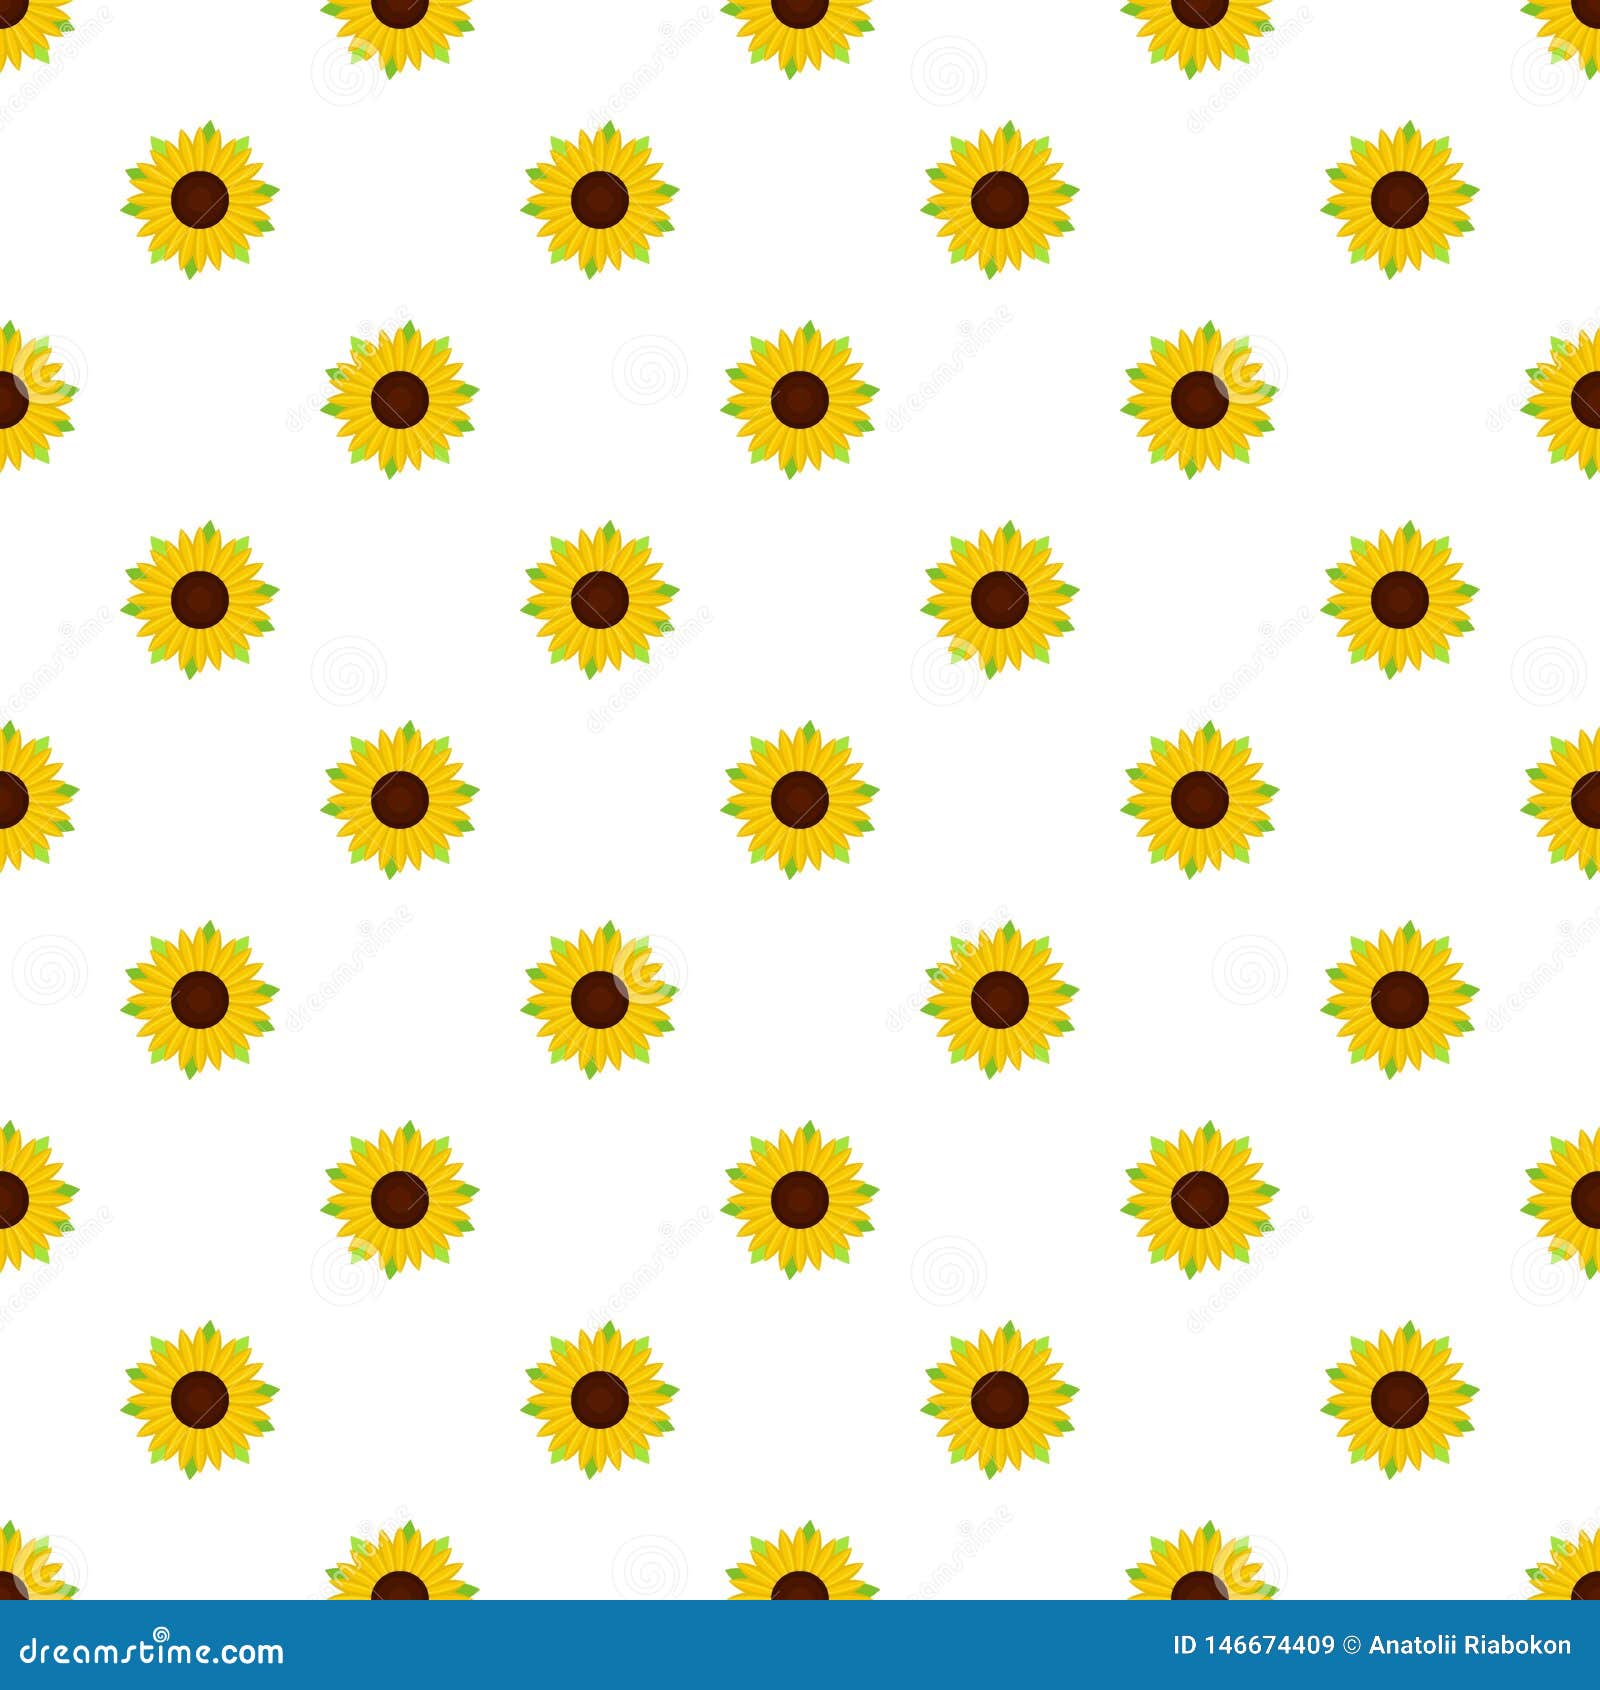 Download Nice Sunflower Pattern Seamless Vector Stock Vector ...